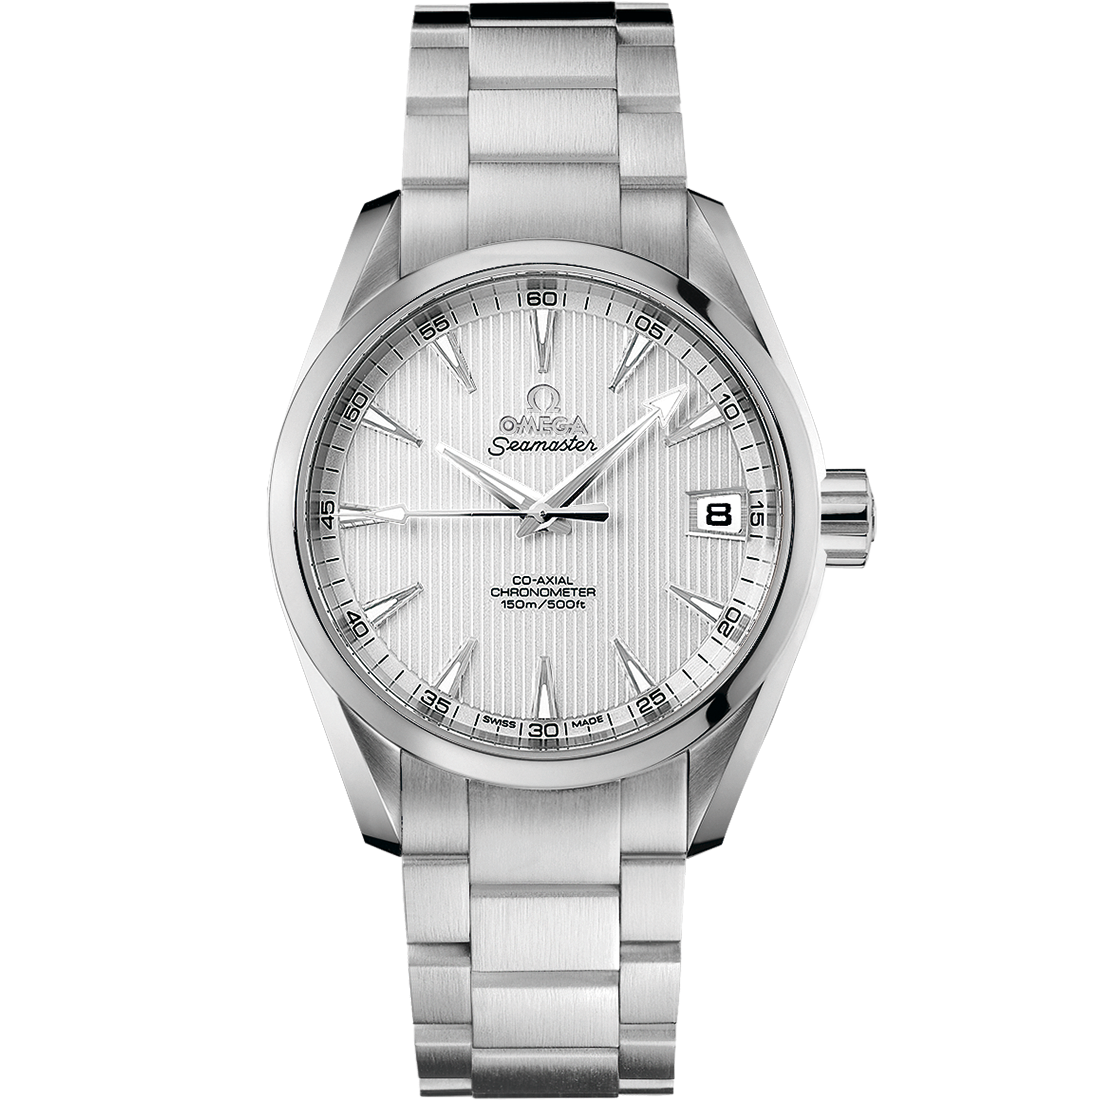 Aqua Terra 150M Seamaster Steel Chronometer Watch 231.10.39.21.02.001 ...